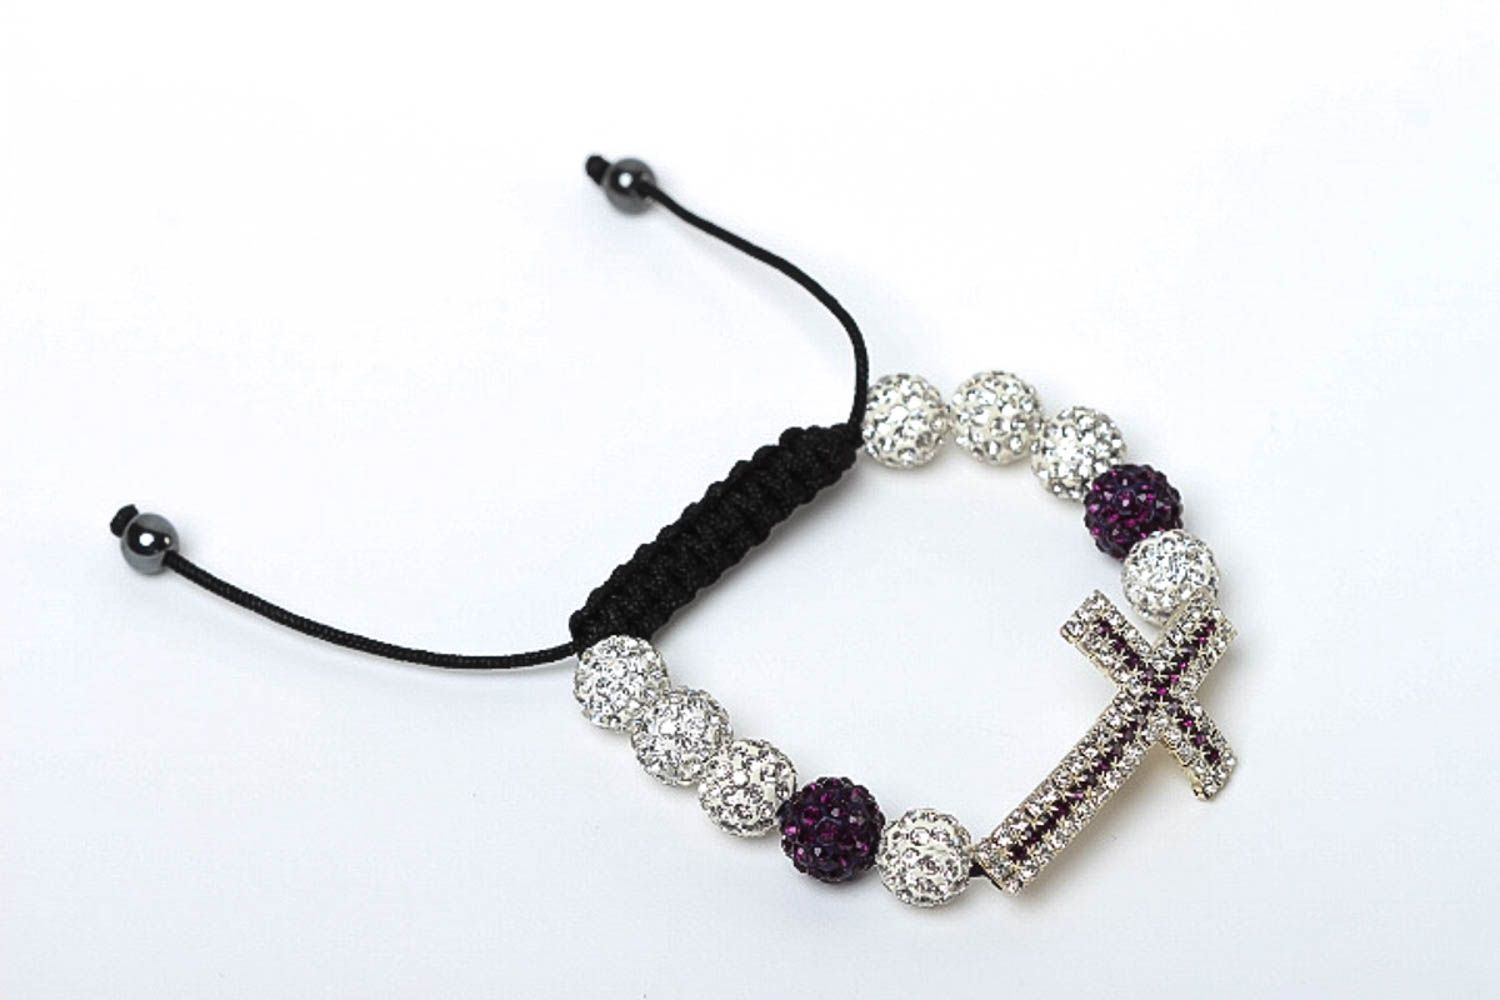 Handmade woven bracelet stylish accessory handmade jewelry braided bracelet photo 2